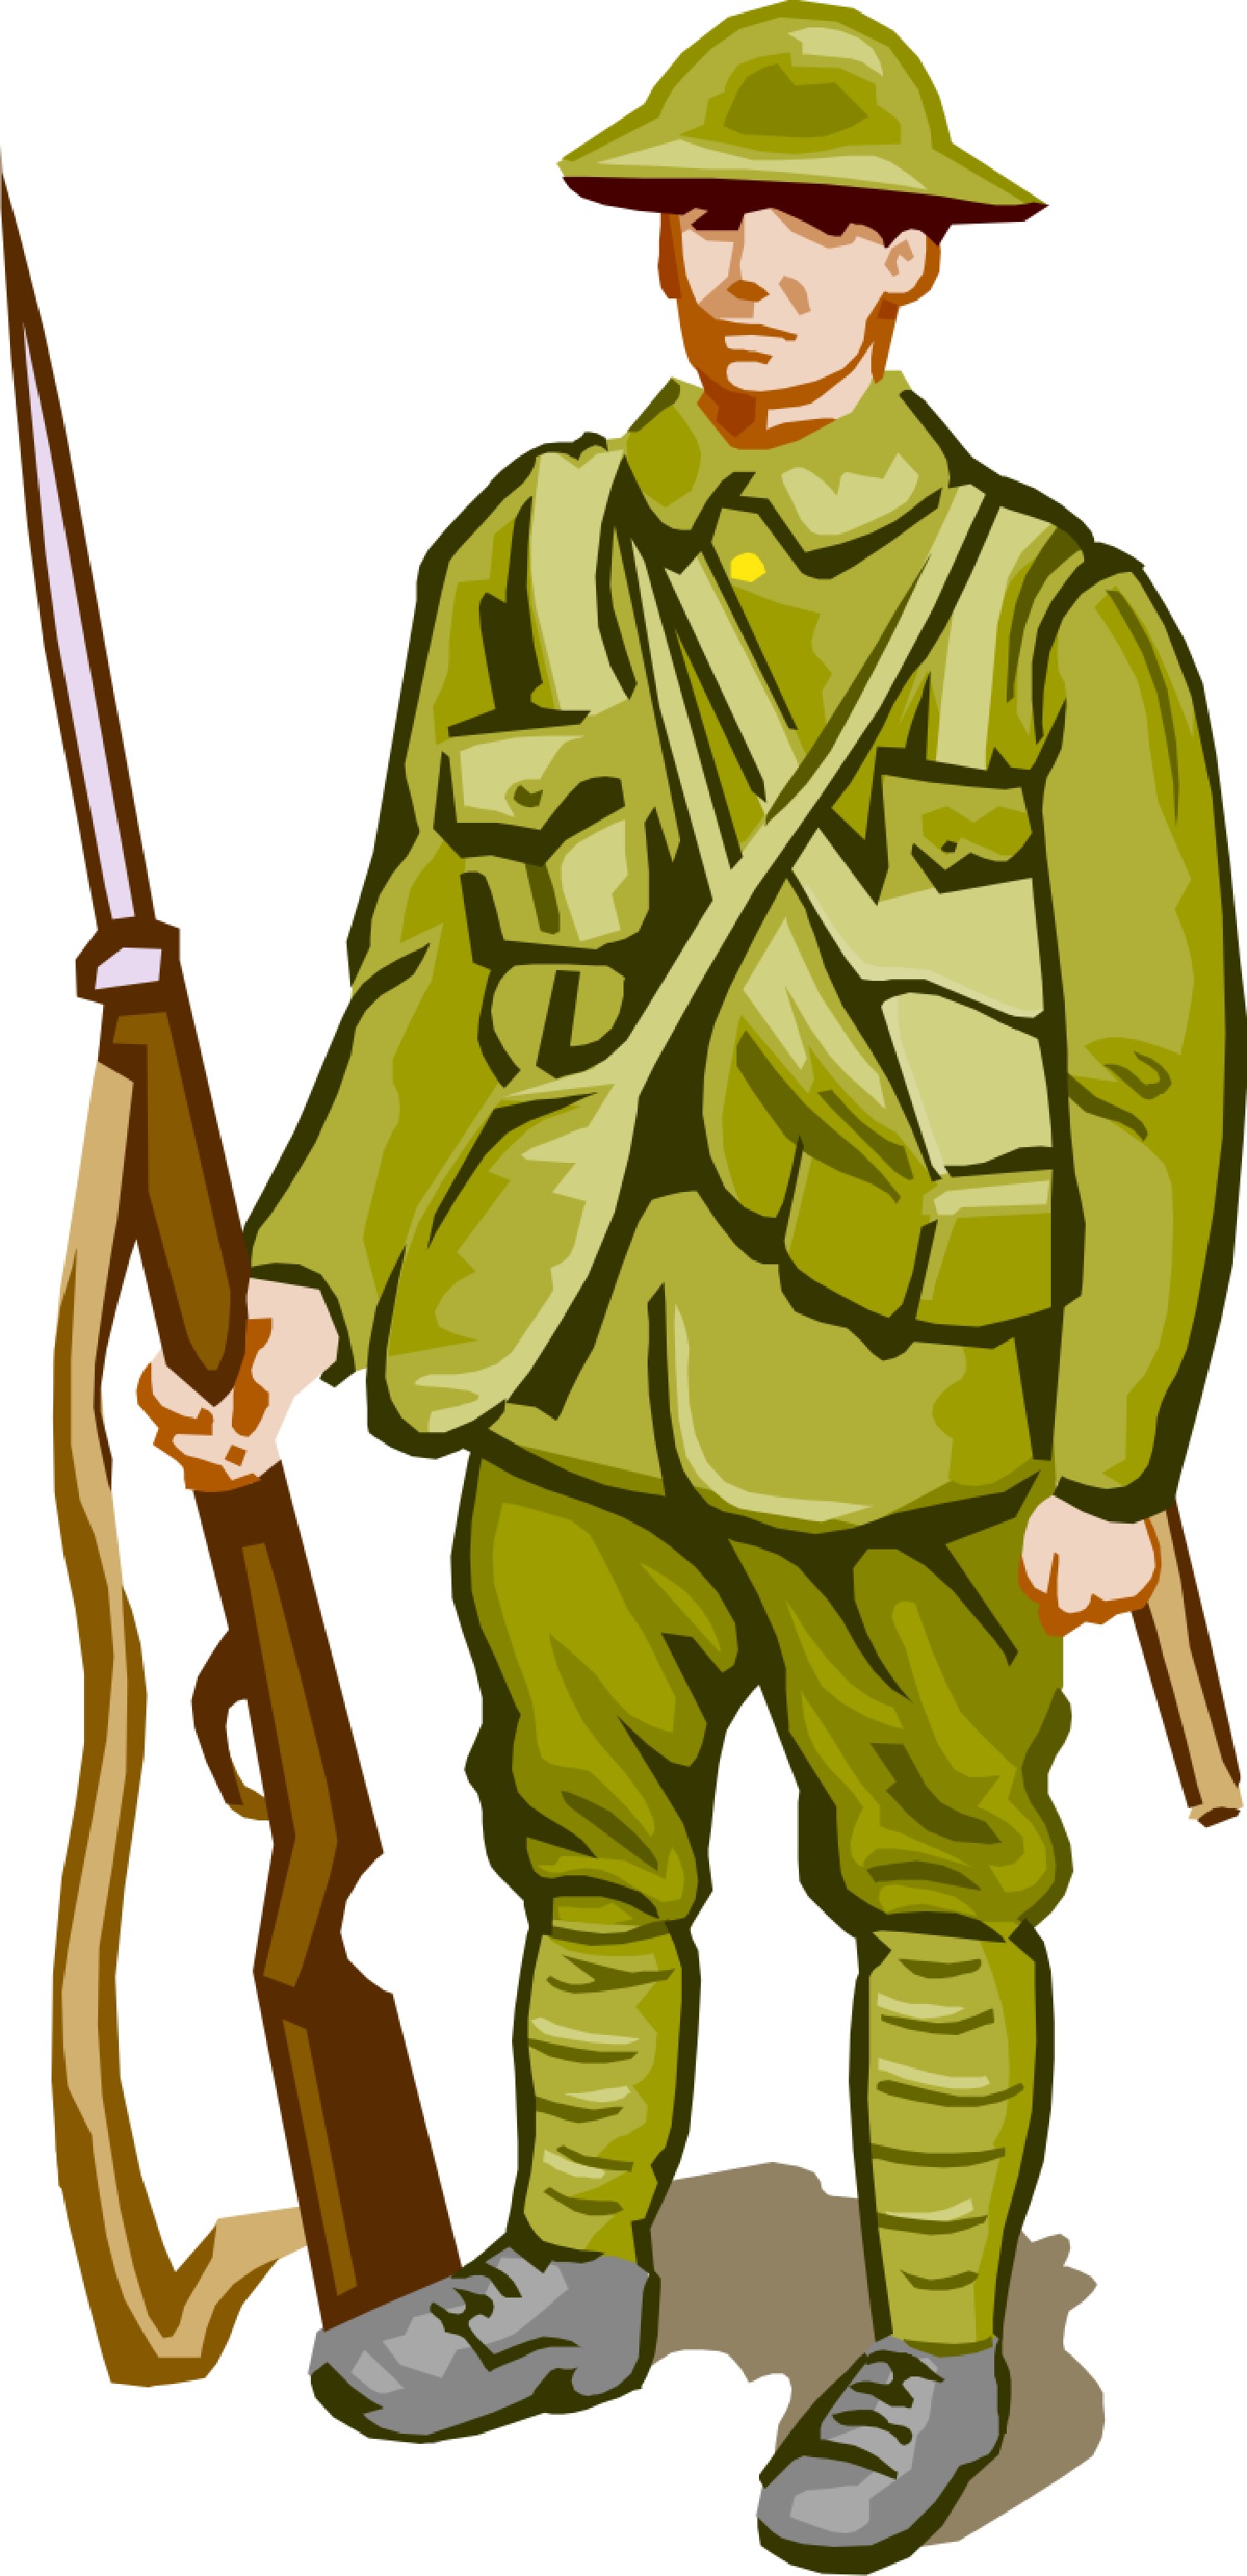 Soldier Cartoon Cliparts.co